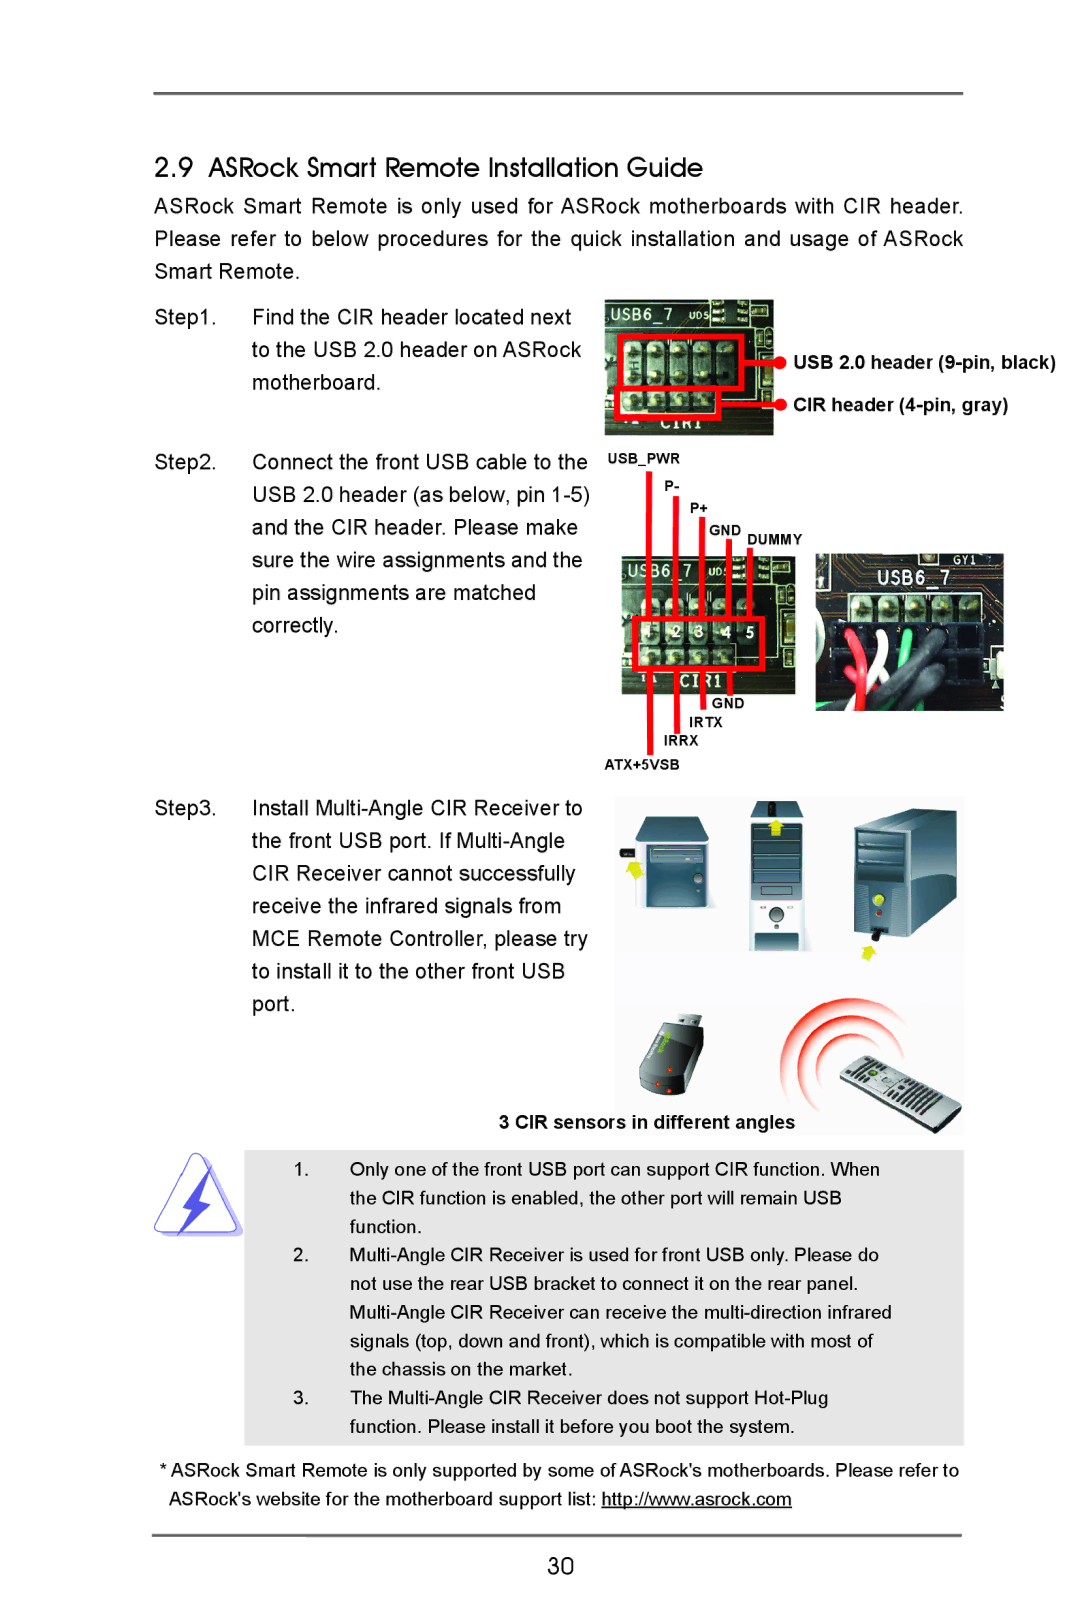 ASRock H77 Pro4/MVP manual ASRock Smart Remote Installation Guide, CIR sensors in different angles 